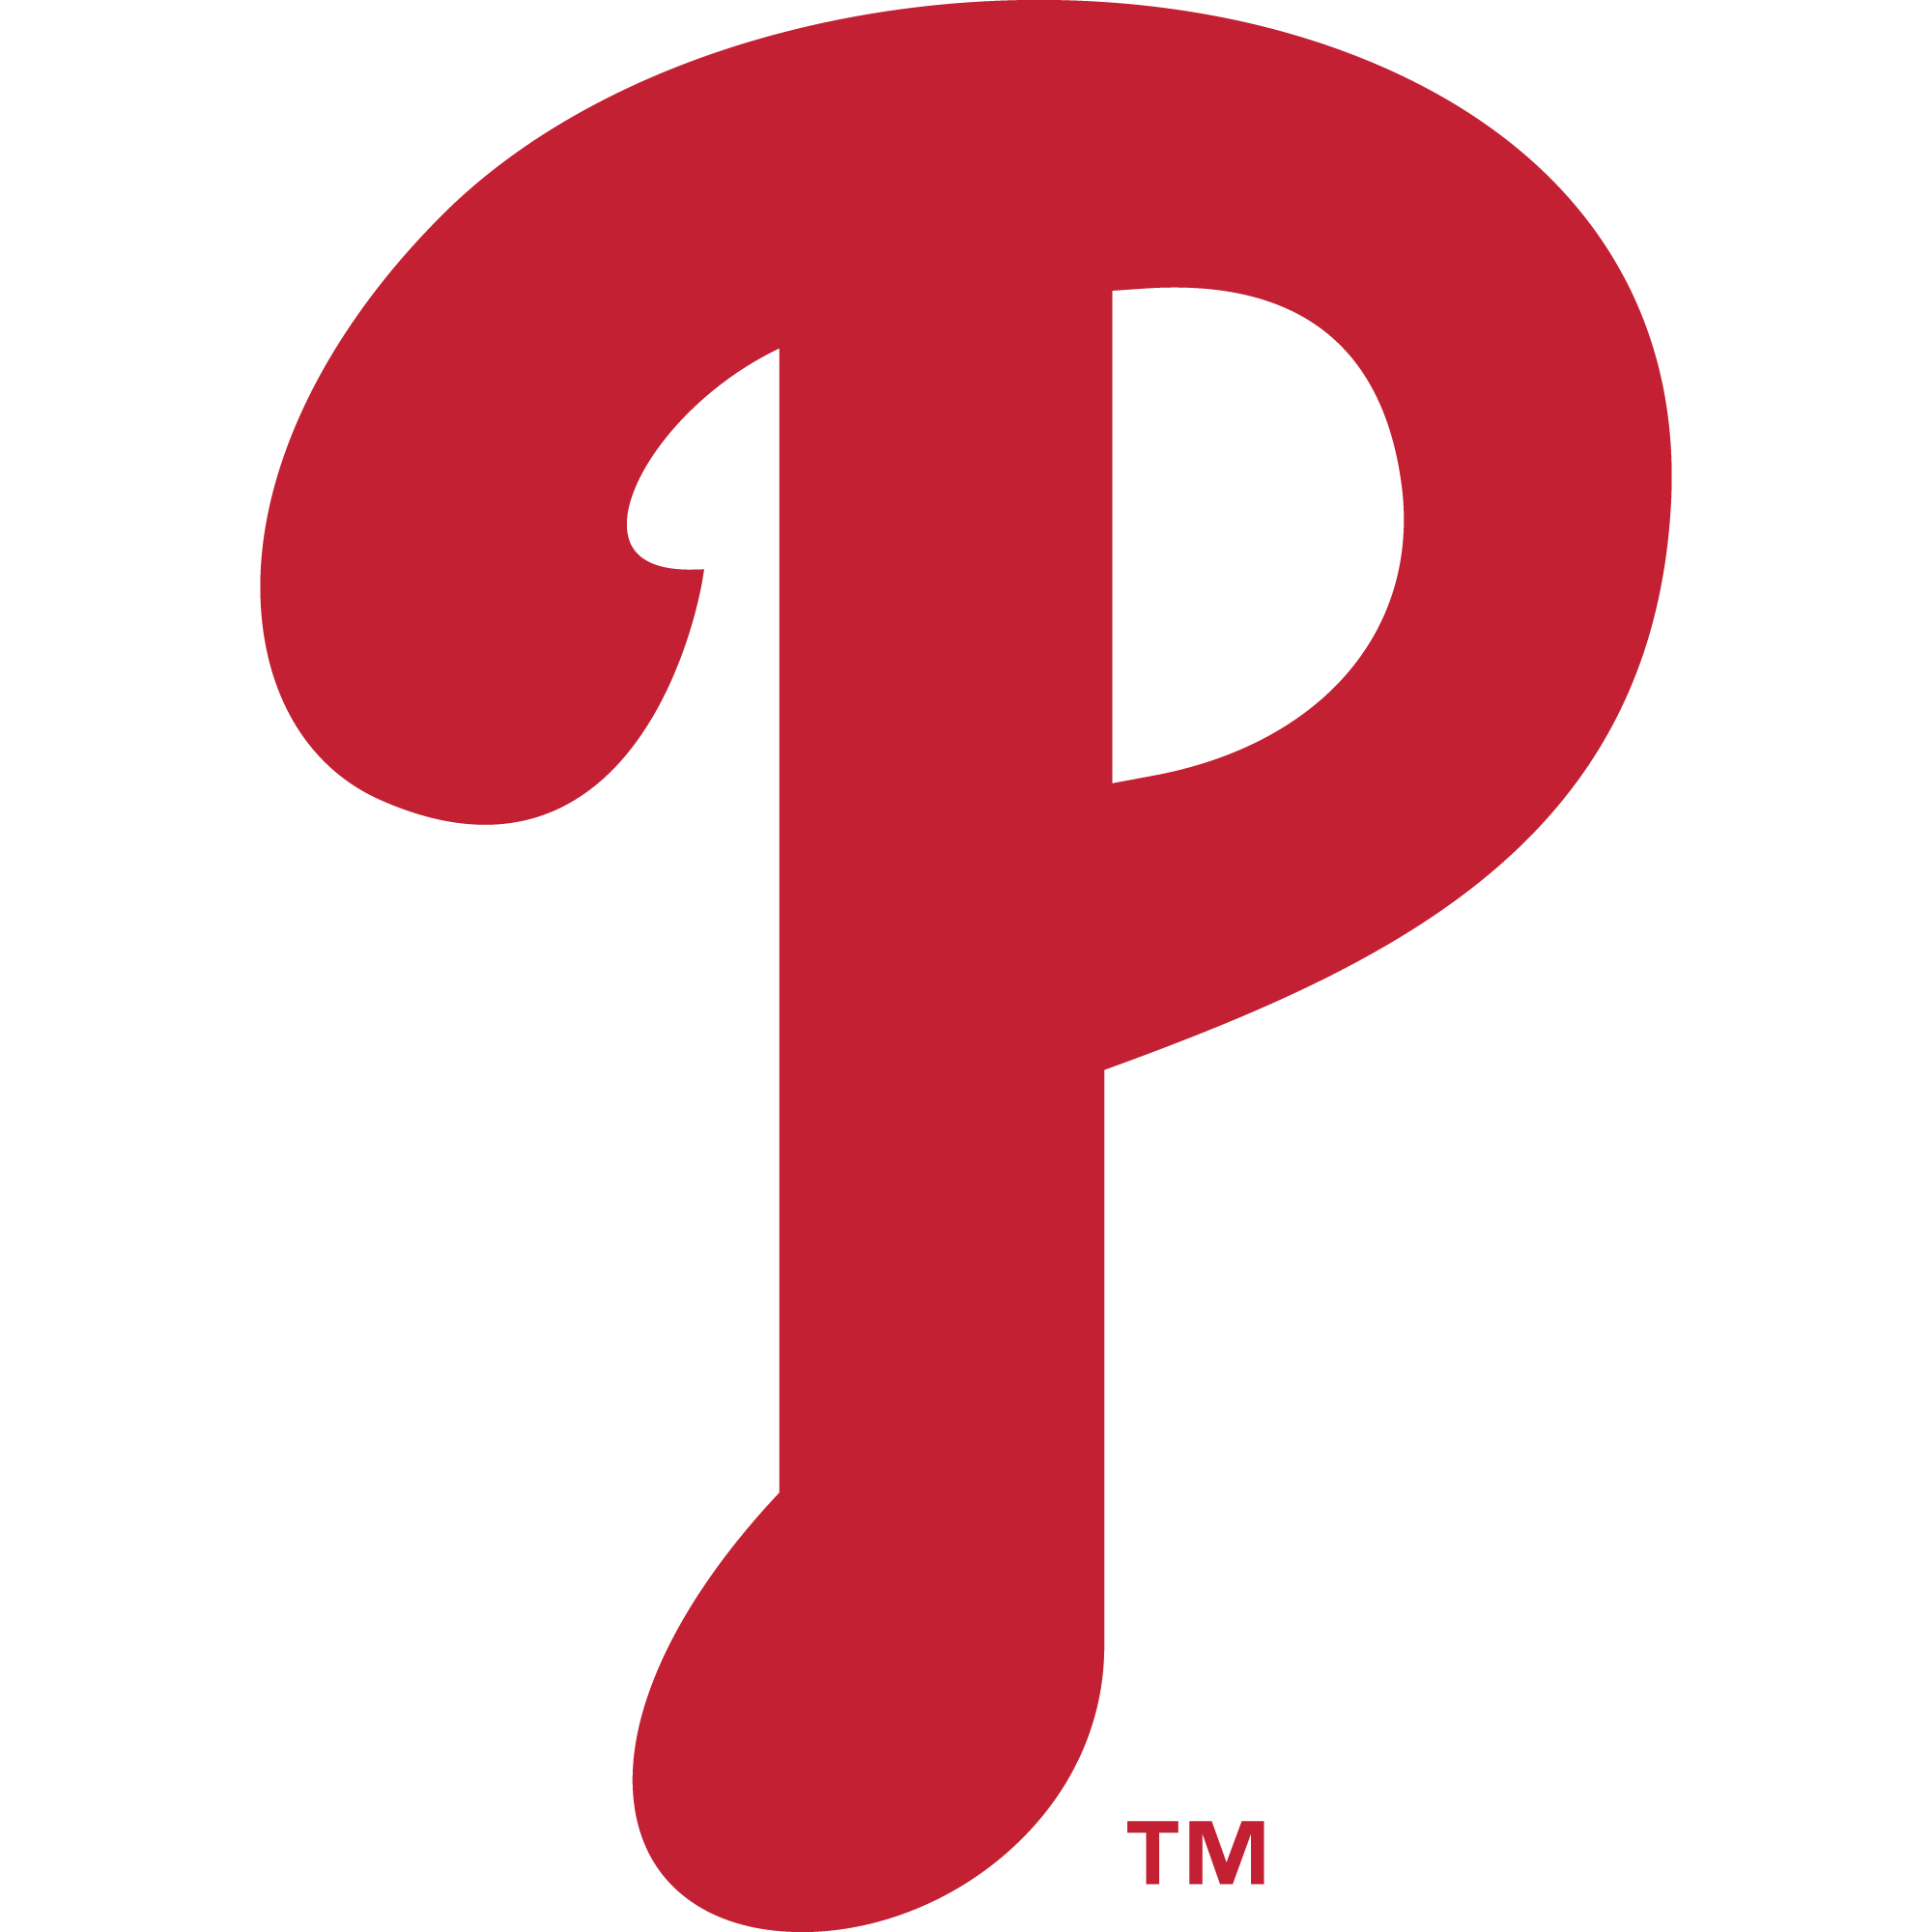 Philadelphia phillies world series on to victory hot dog cake logo